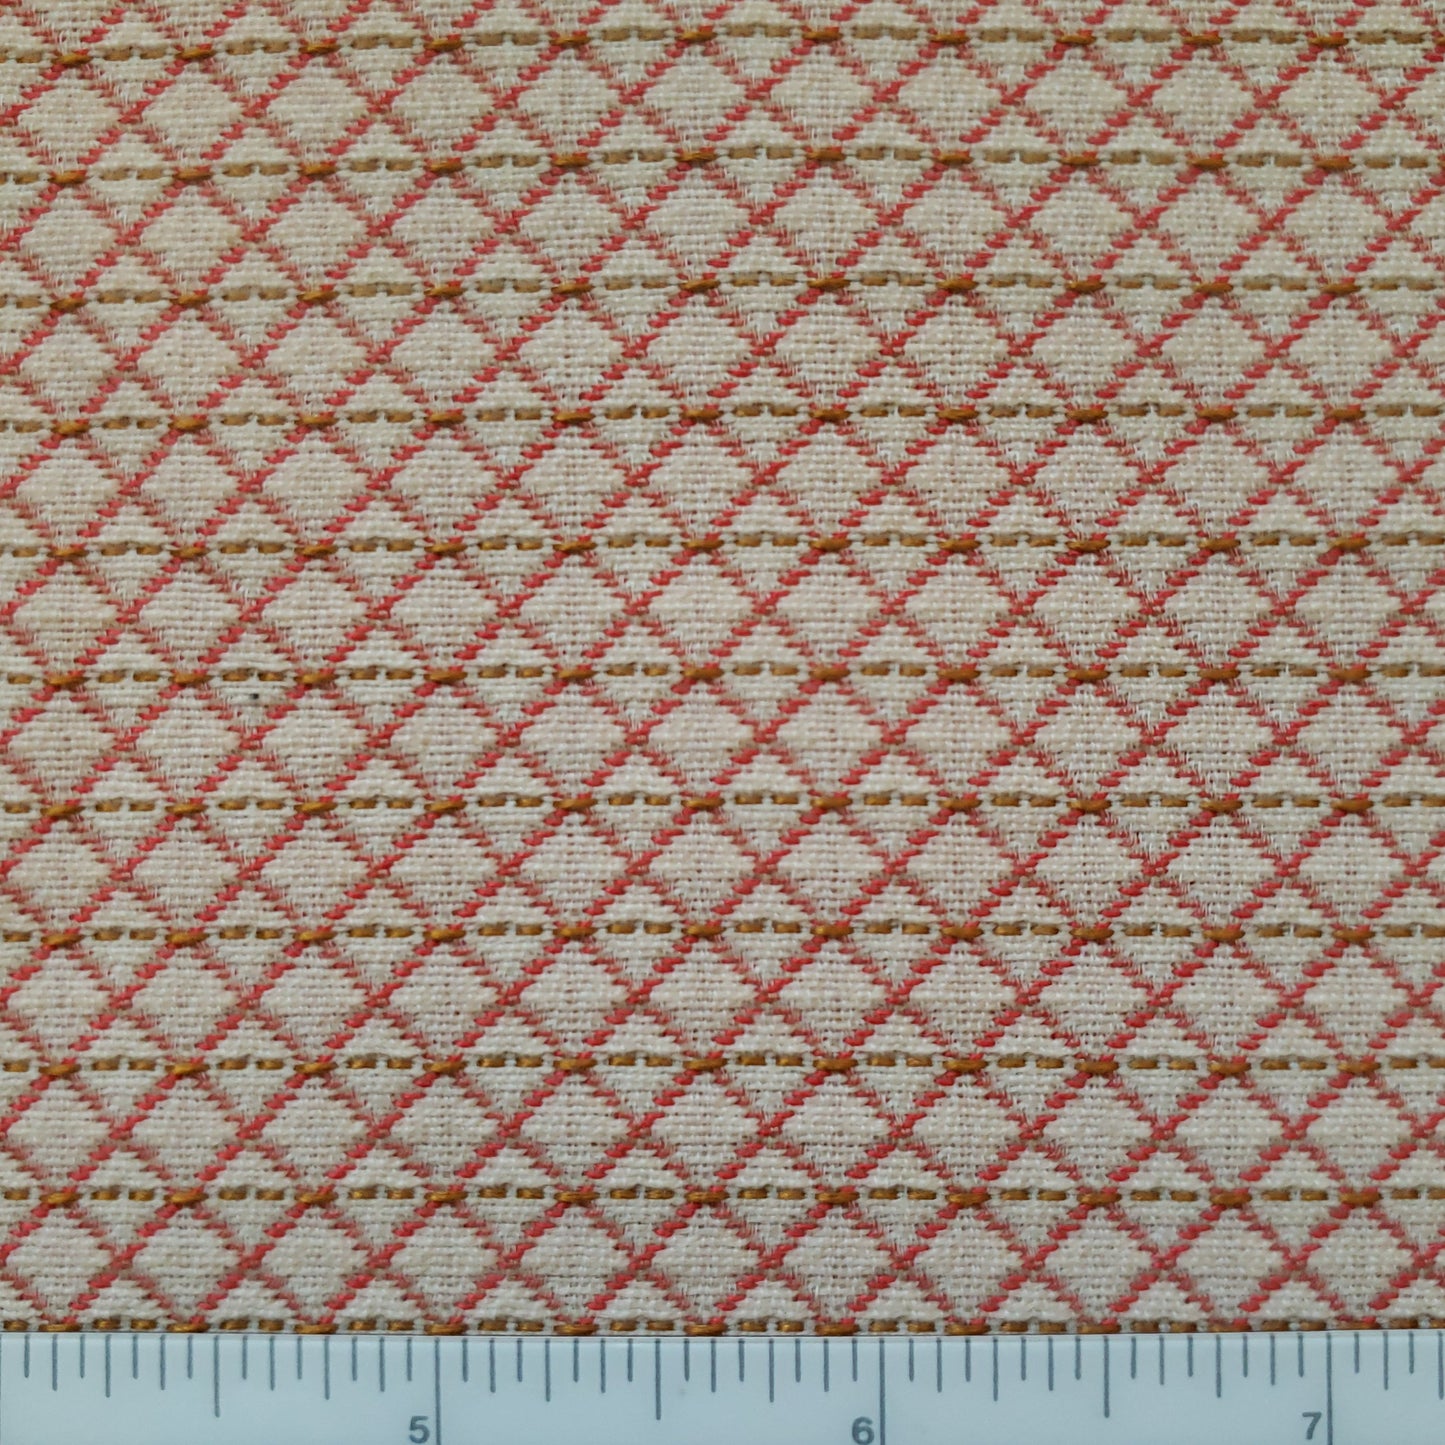 Shrimp Diamond Grid Fabric